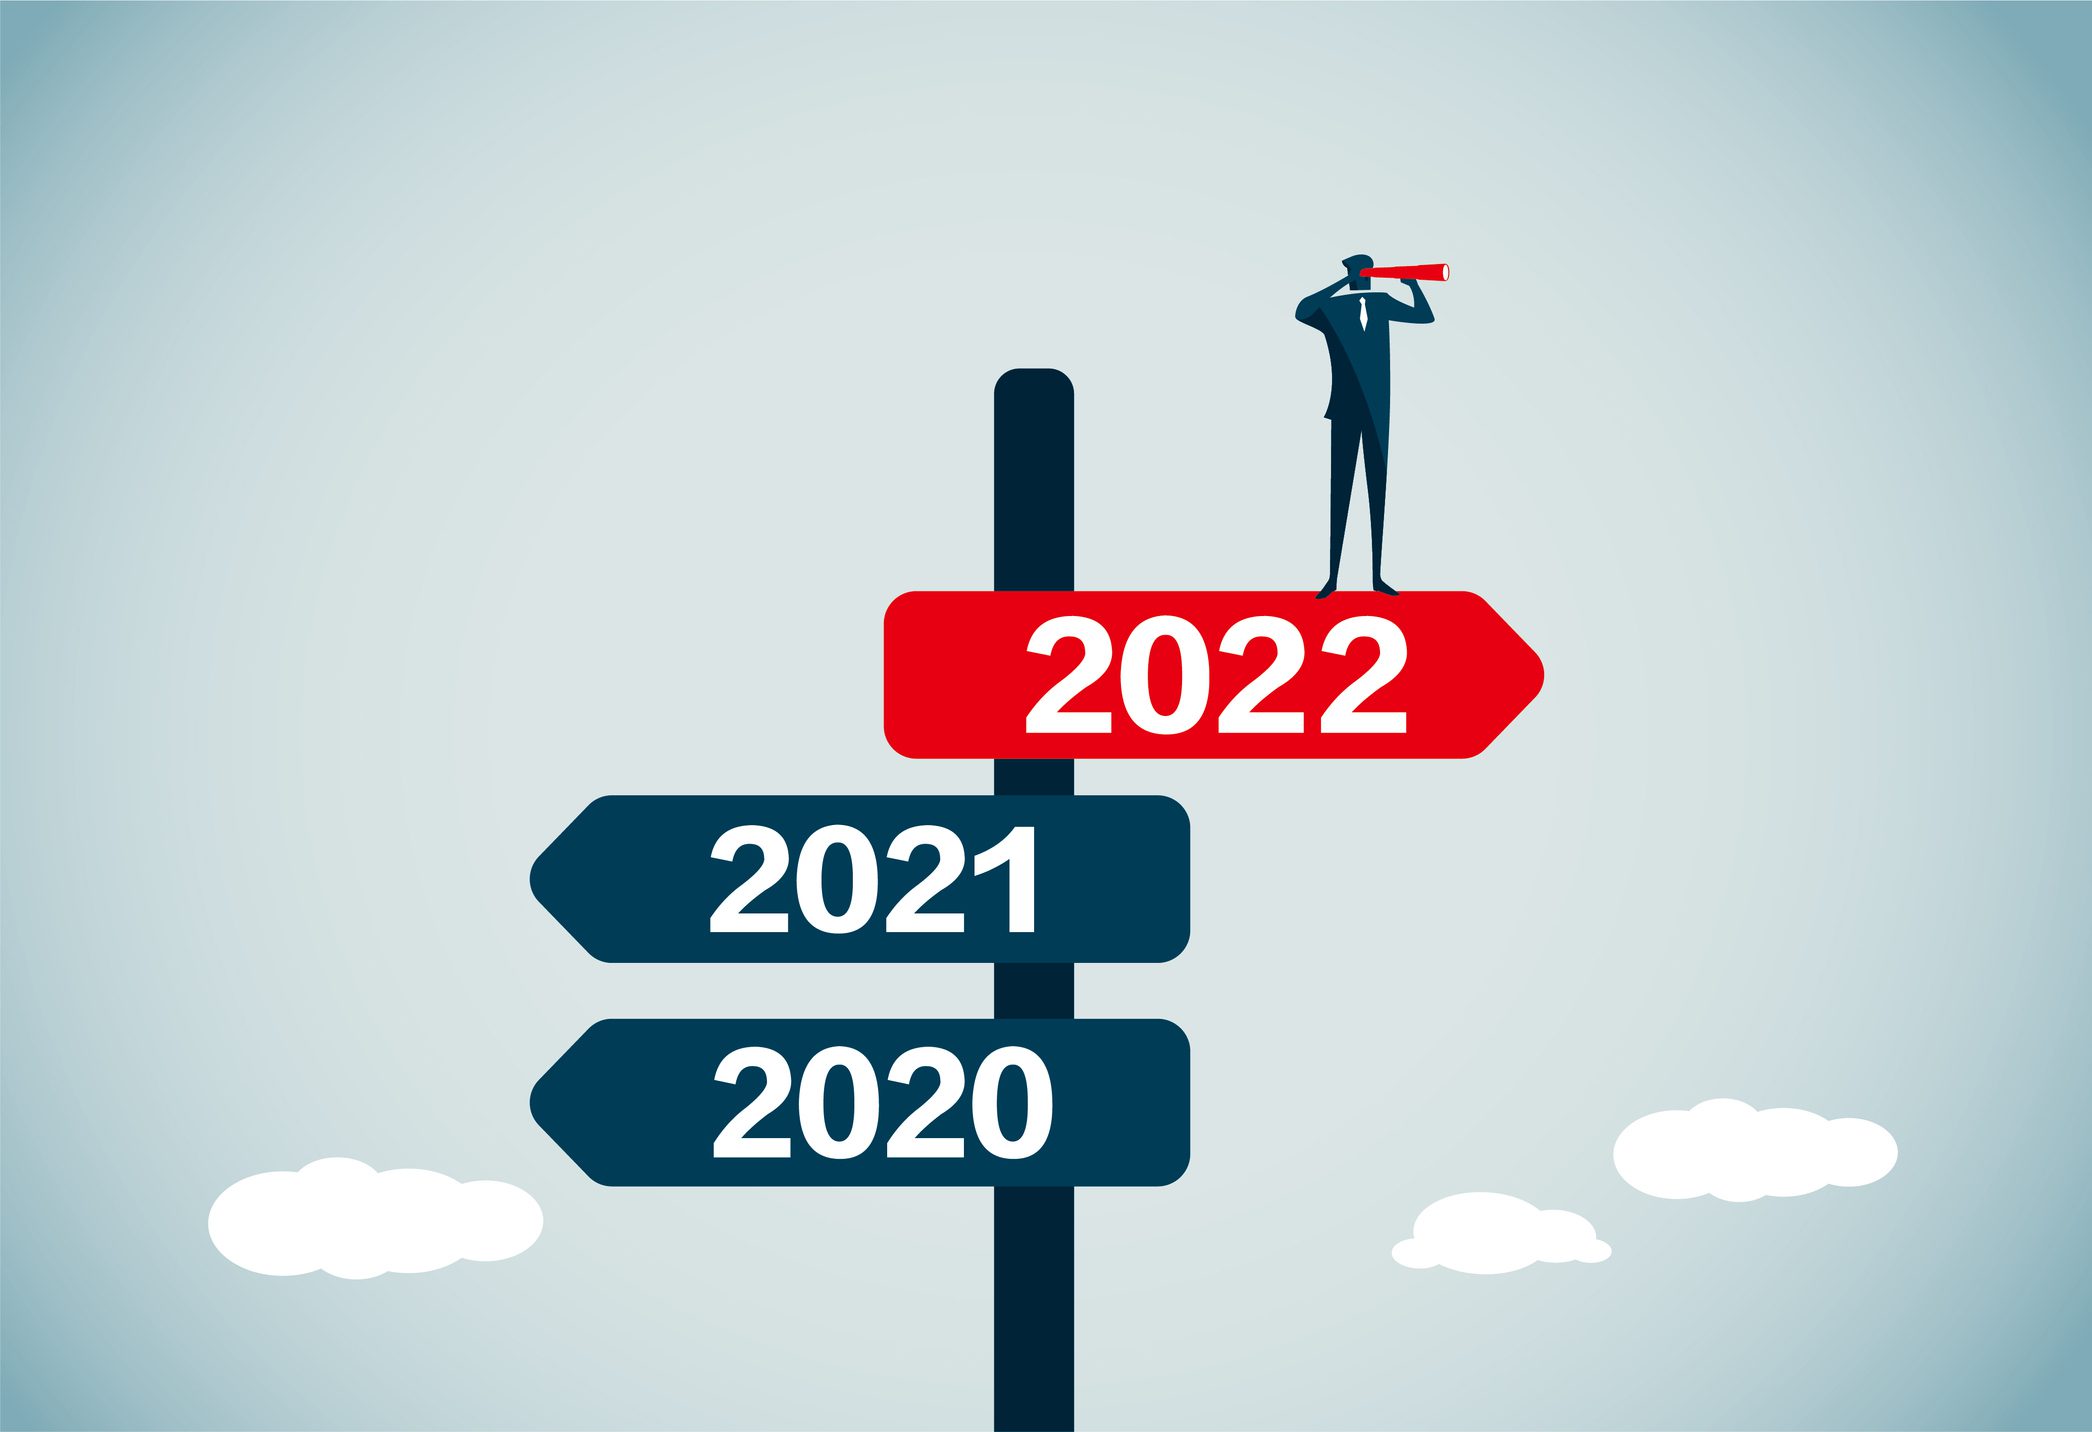 2022: What’s on the Horizon